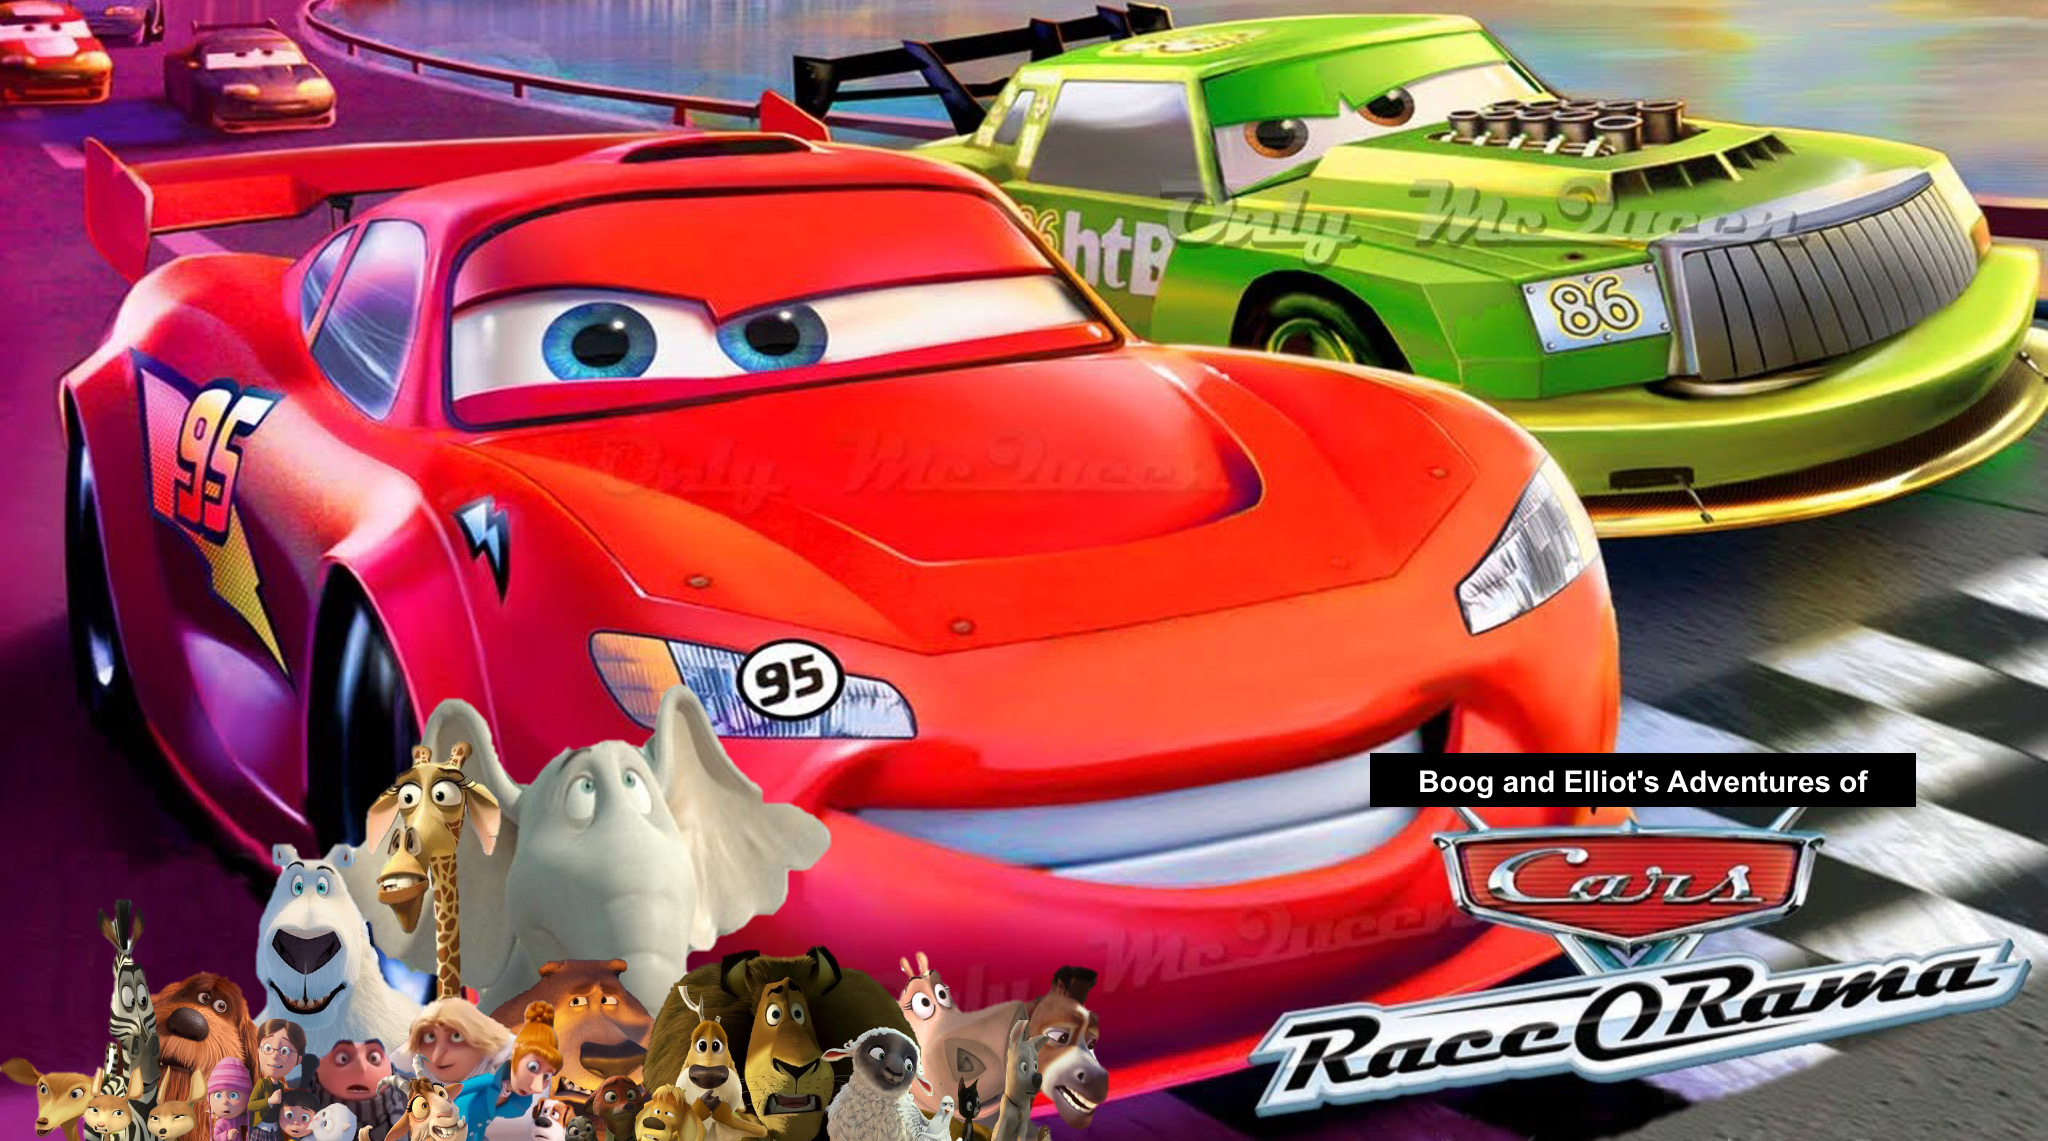 Boog and Elliot's Adventures of Cars Race-O-Rama! by DarkMoonAnimation on  DeviantArt